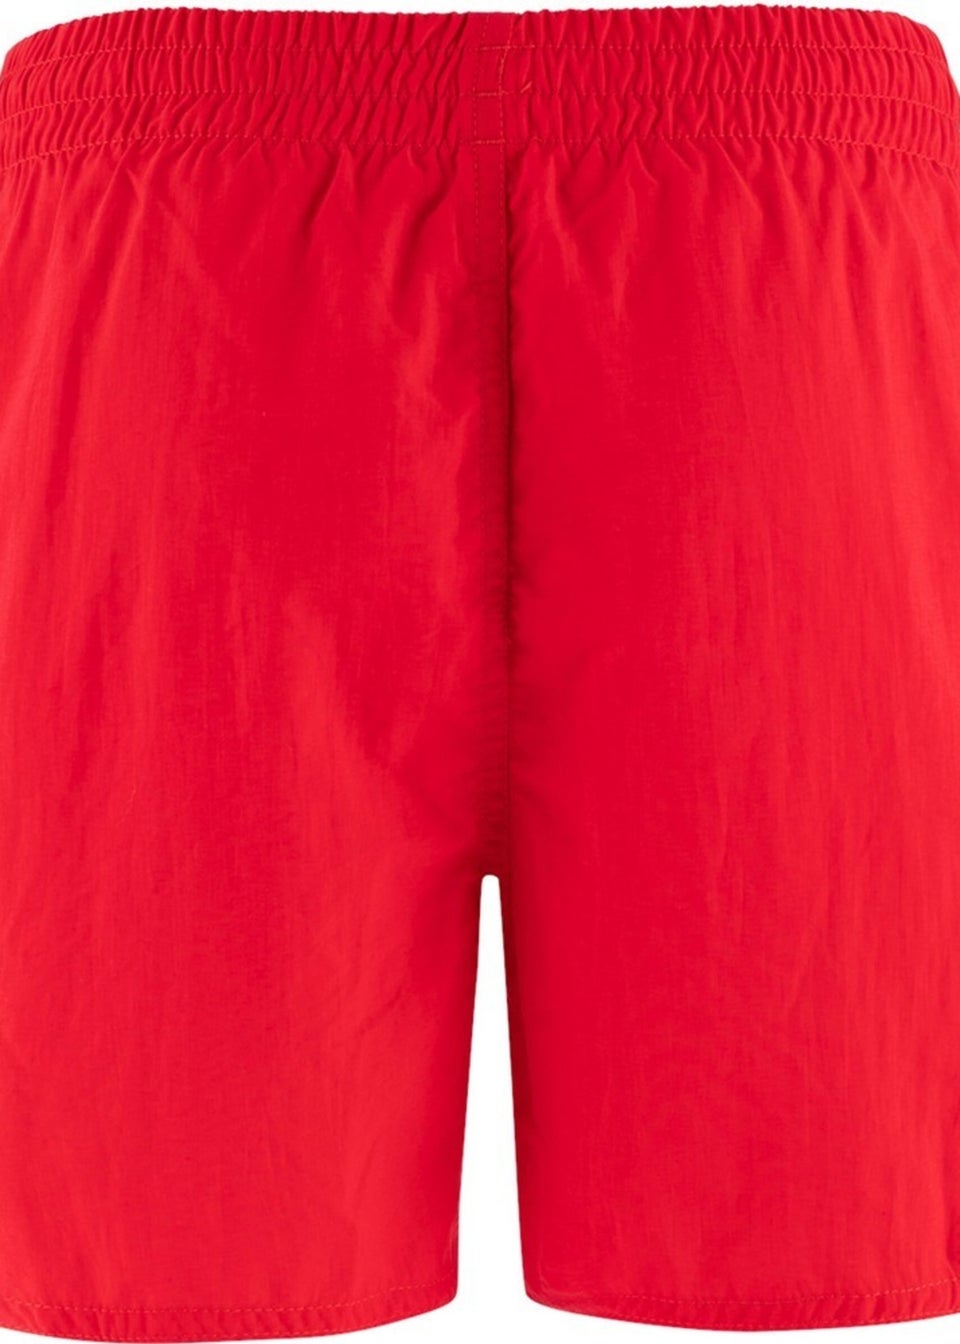 Speedo Boys Red Essential Swim Shorts